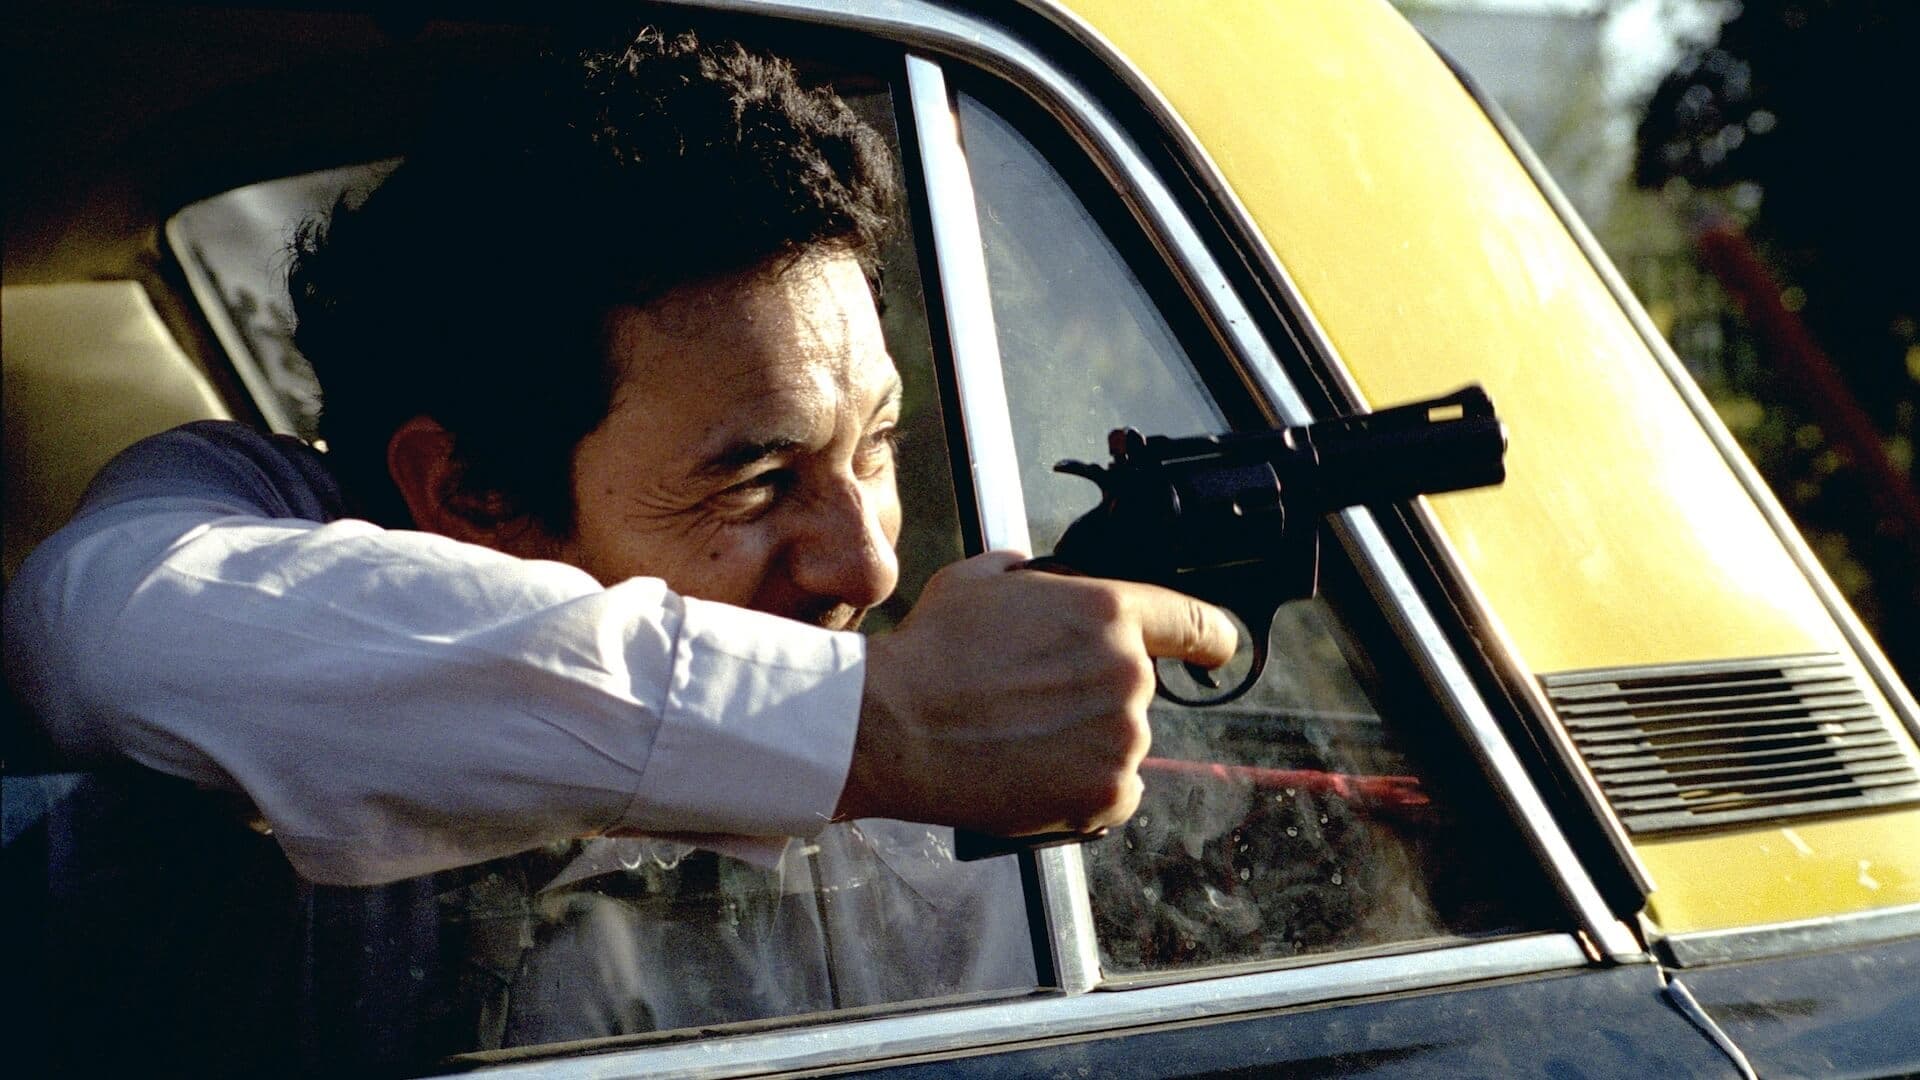 Taxi para 3 (2001)